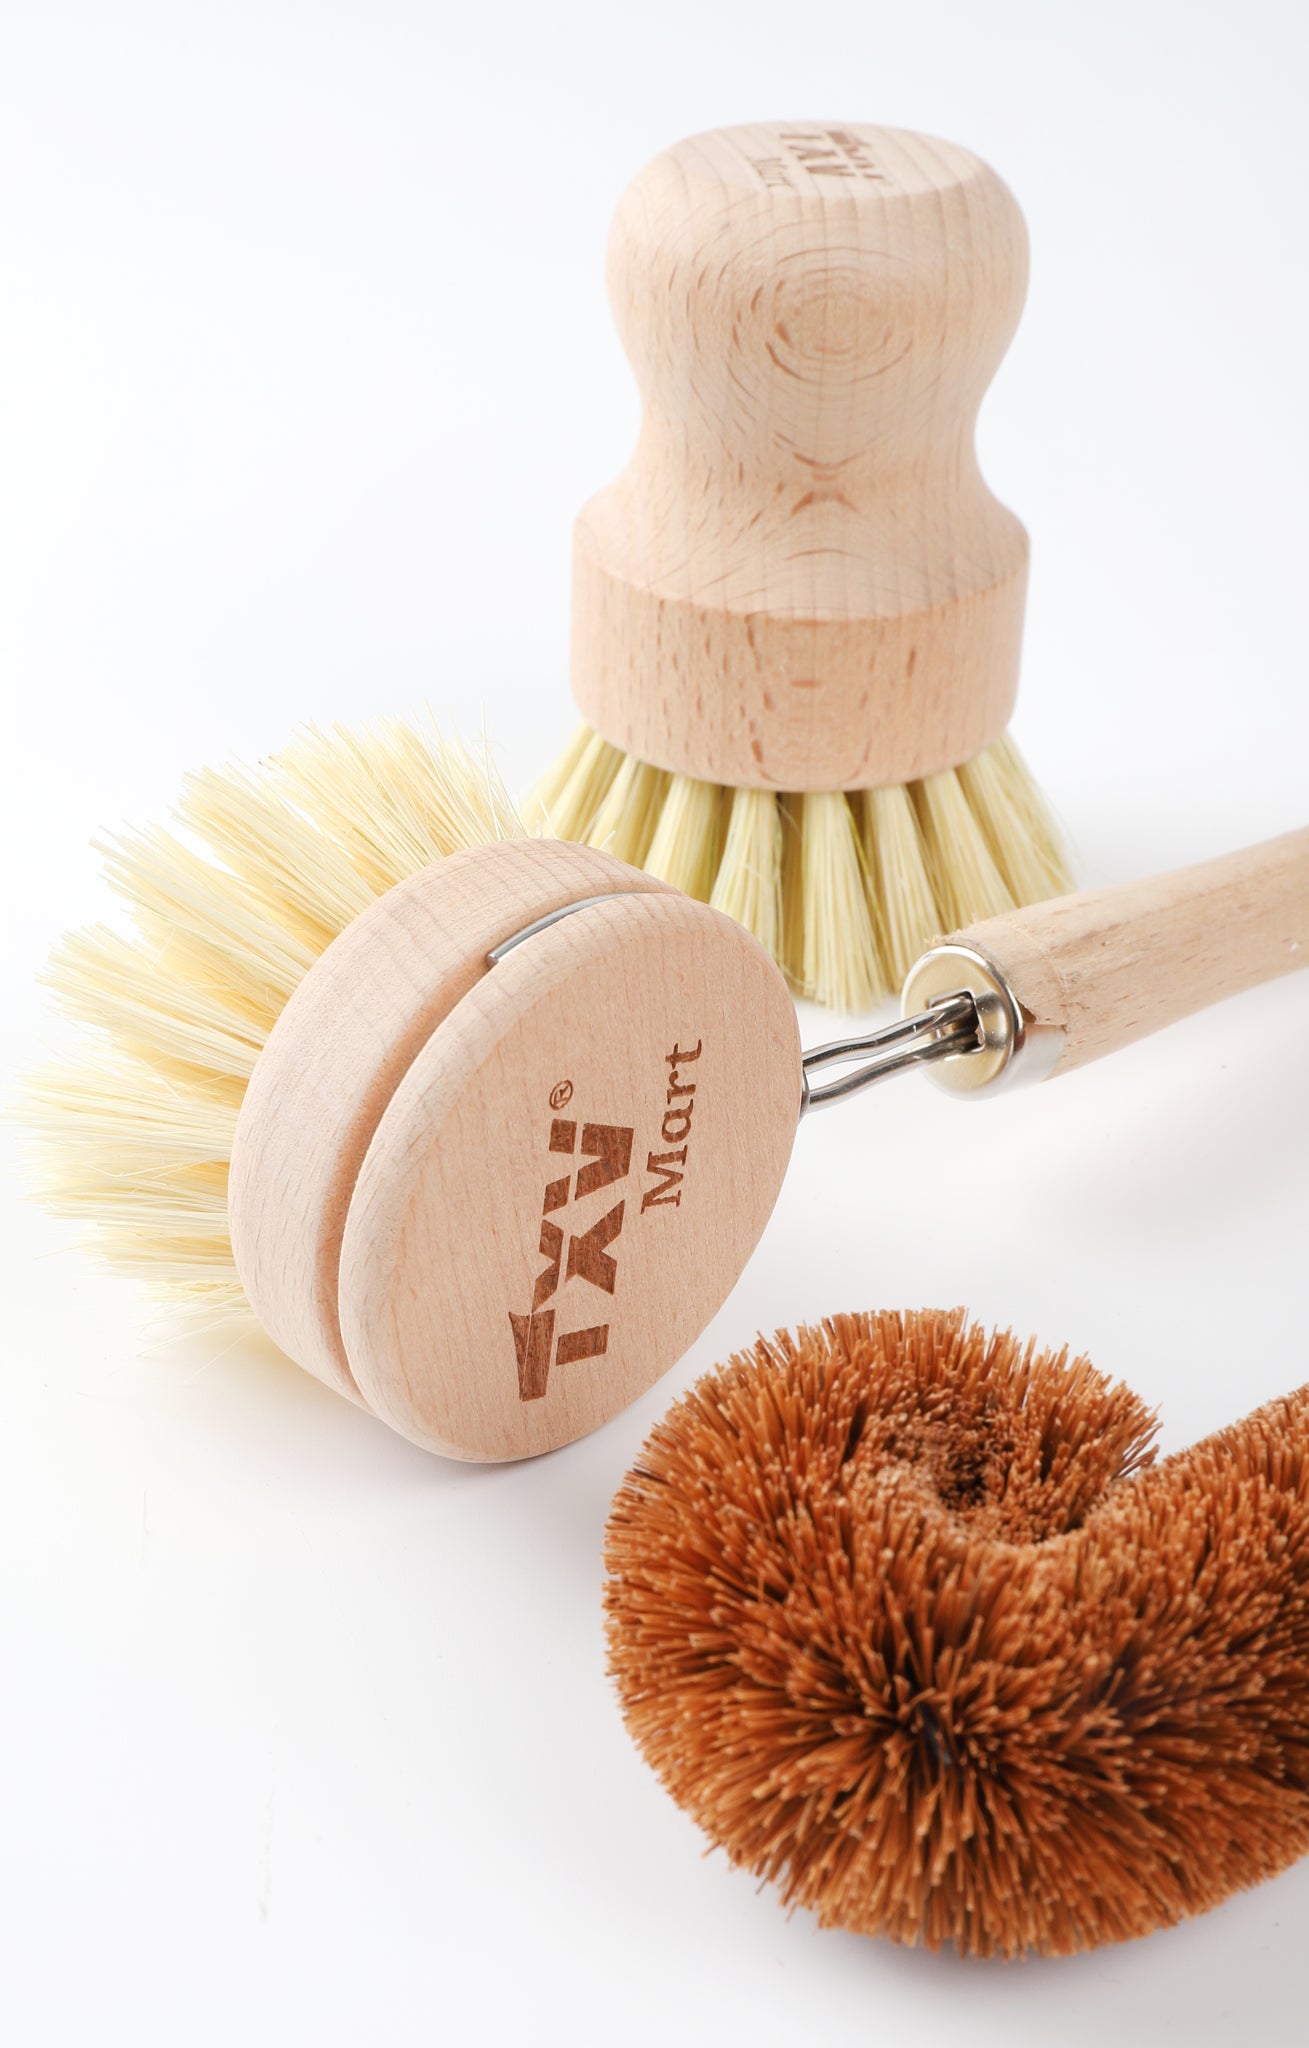 Openfly Kitchen Cleaning Brushes Set, Multipurpose Cleaning Brush Set with  Bendable Scrub Brush, Grips Dish Brush, Nano Emery Sponge, Small Scrub